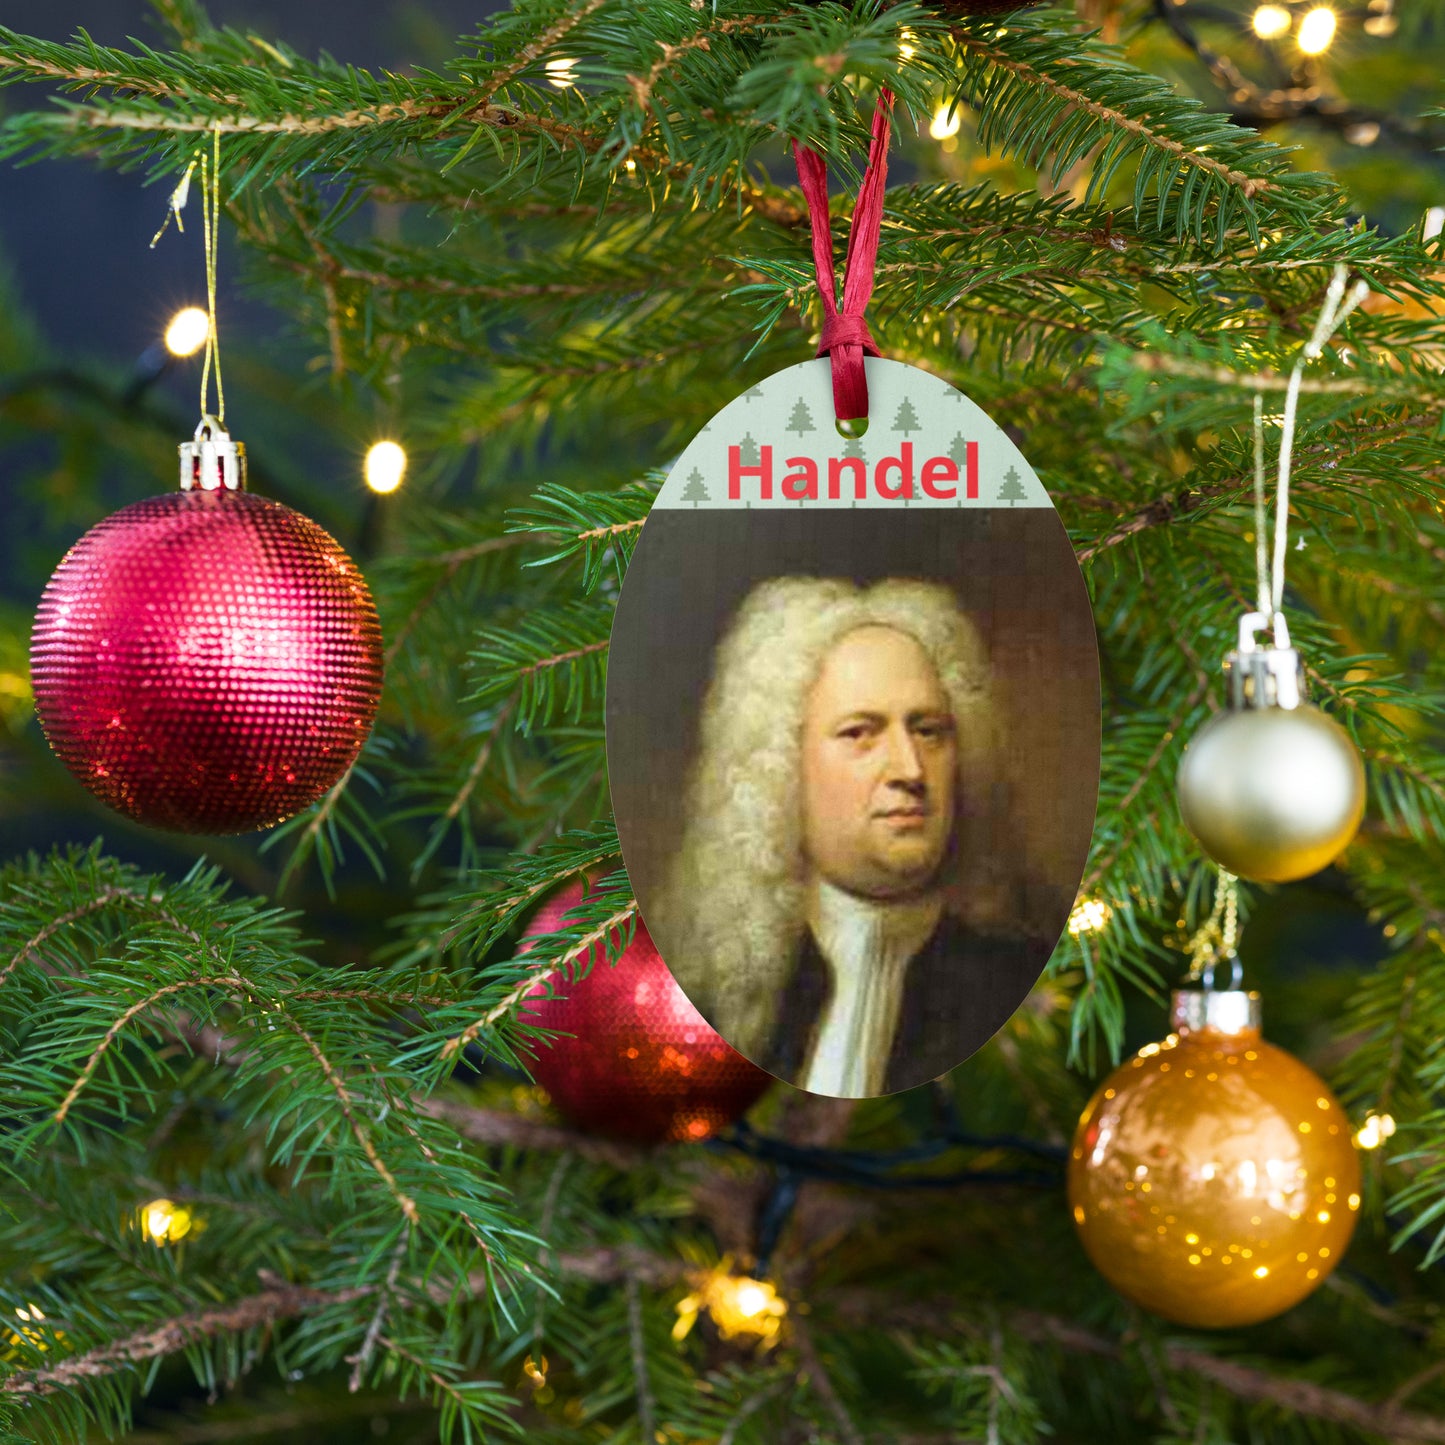 Handel "unto us a child is born" wooden Christmas ornament